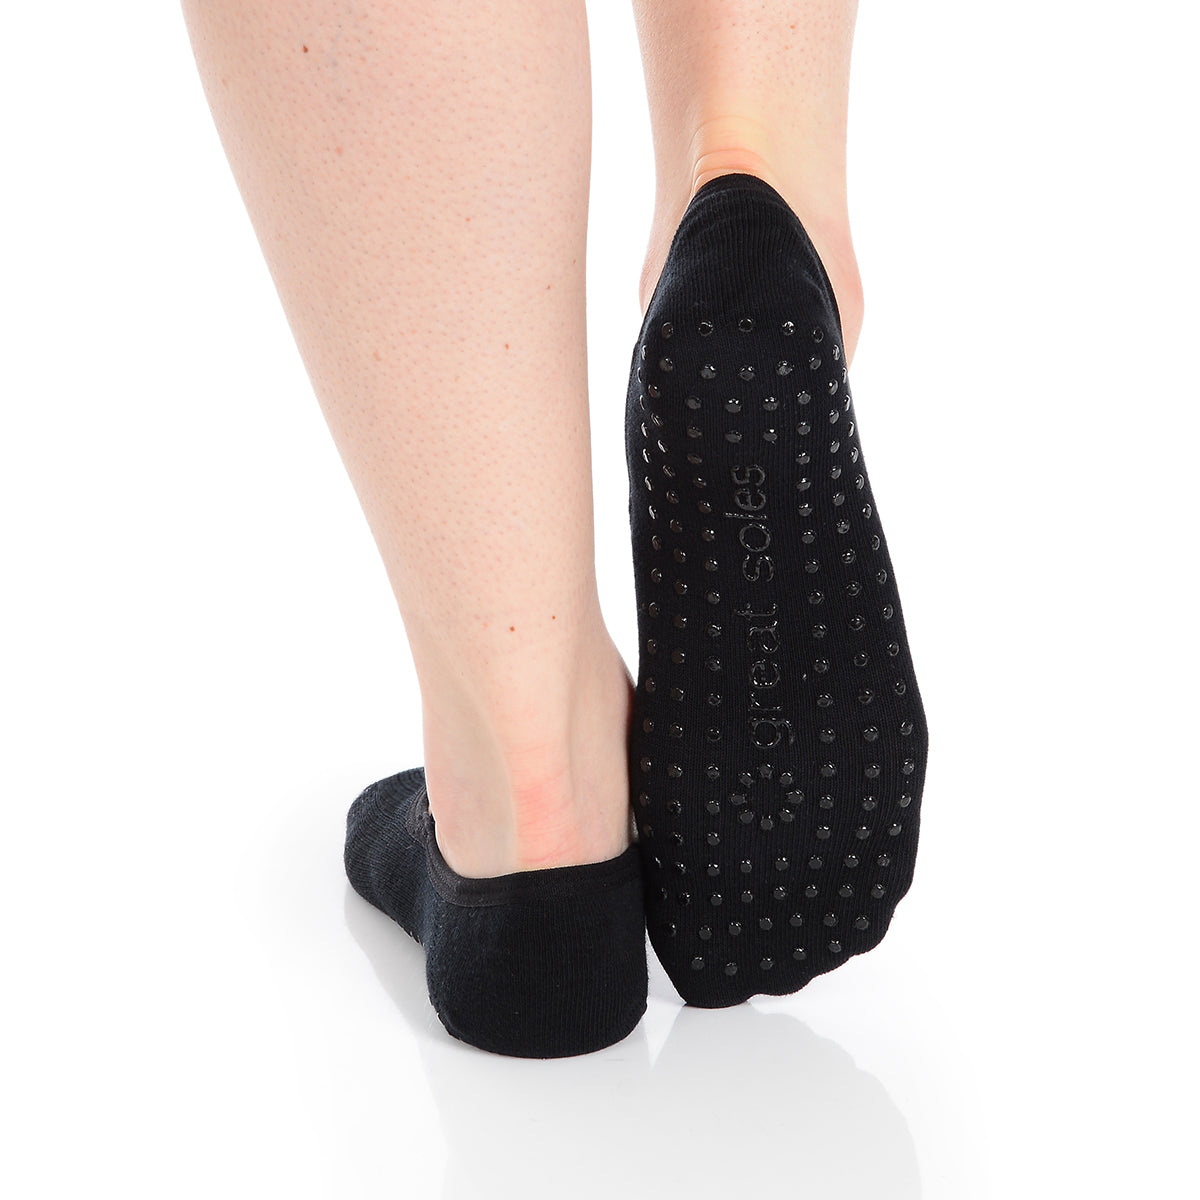 Socks Yoga Grip Dance Shoes Barre Hot Wraps Studio Grippy Ballet